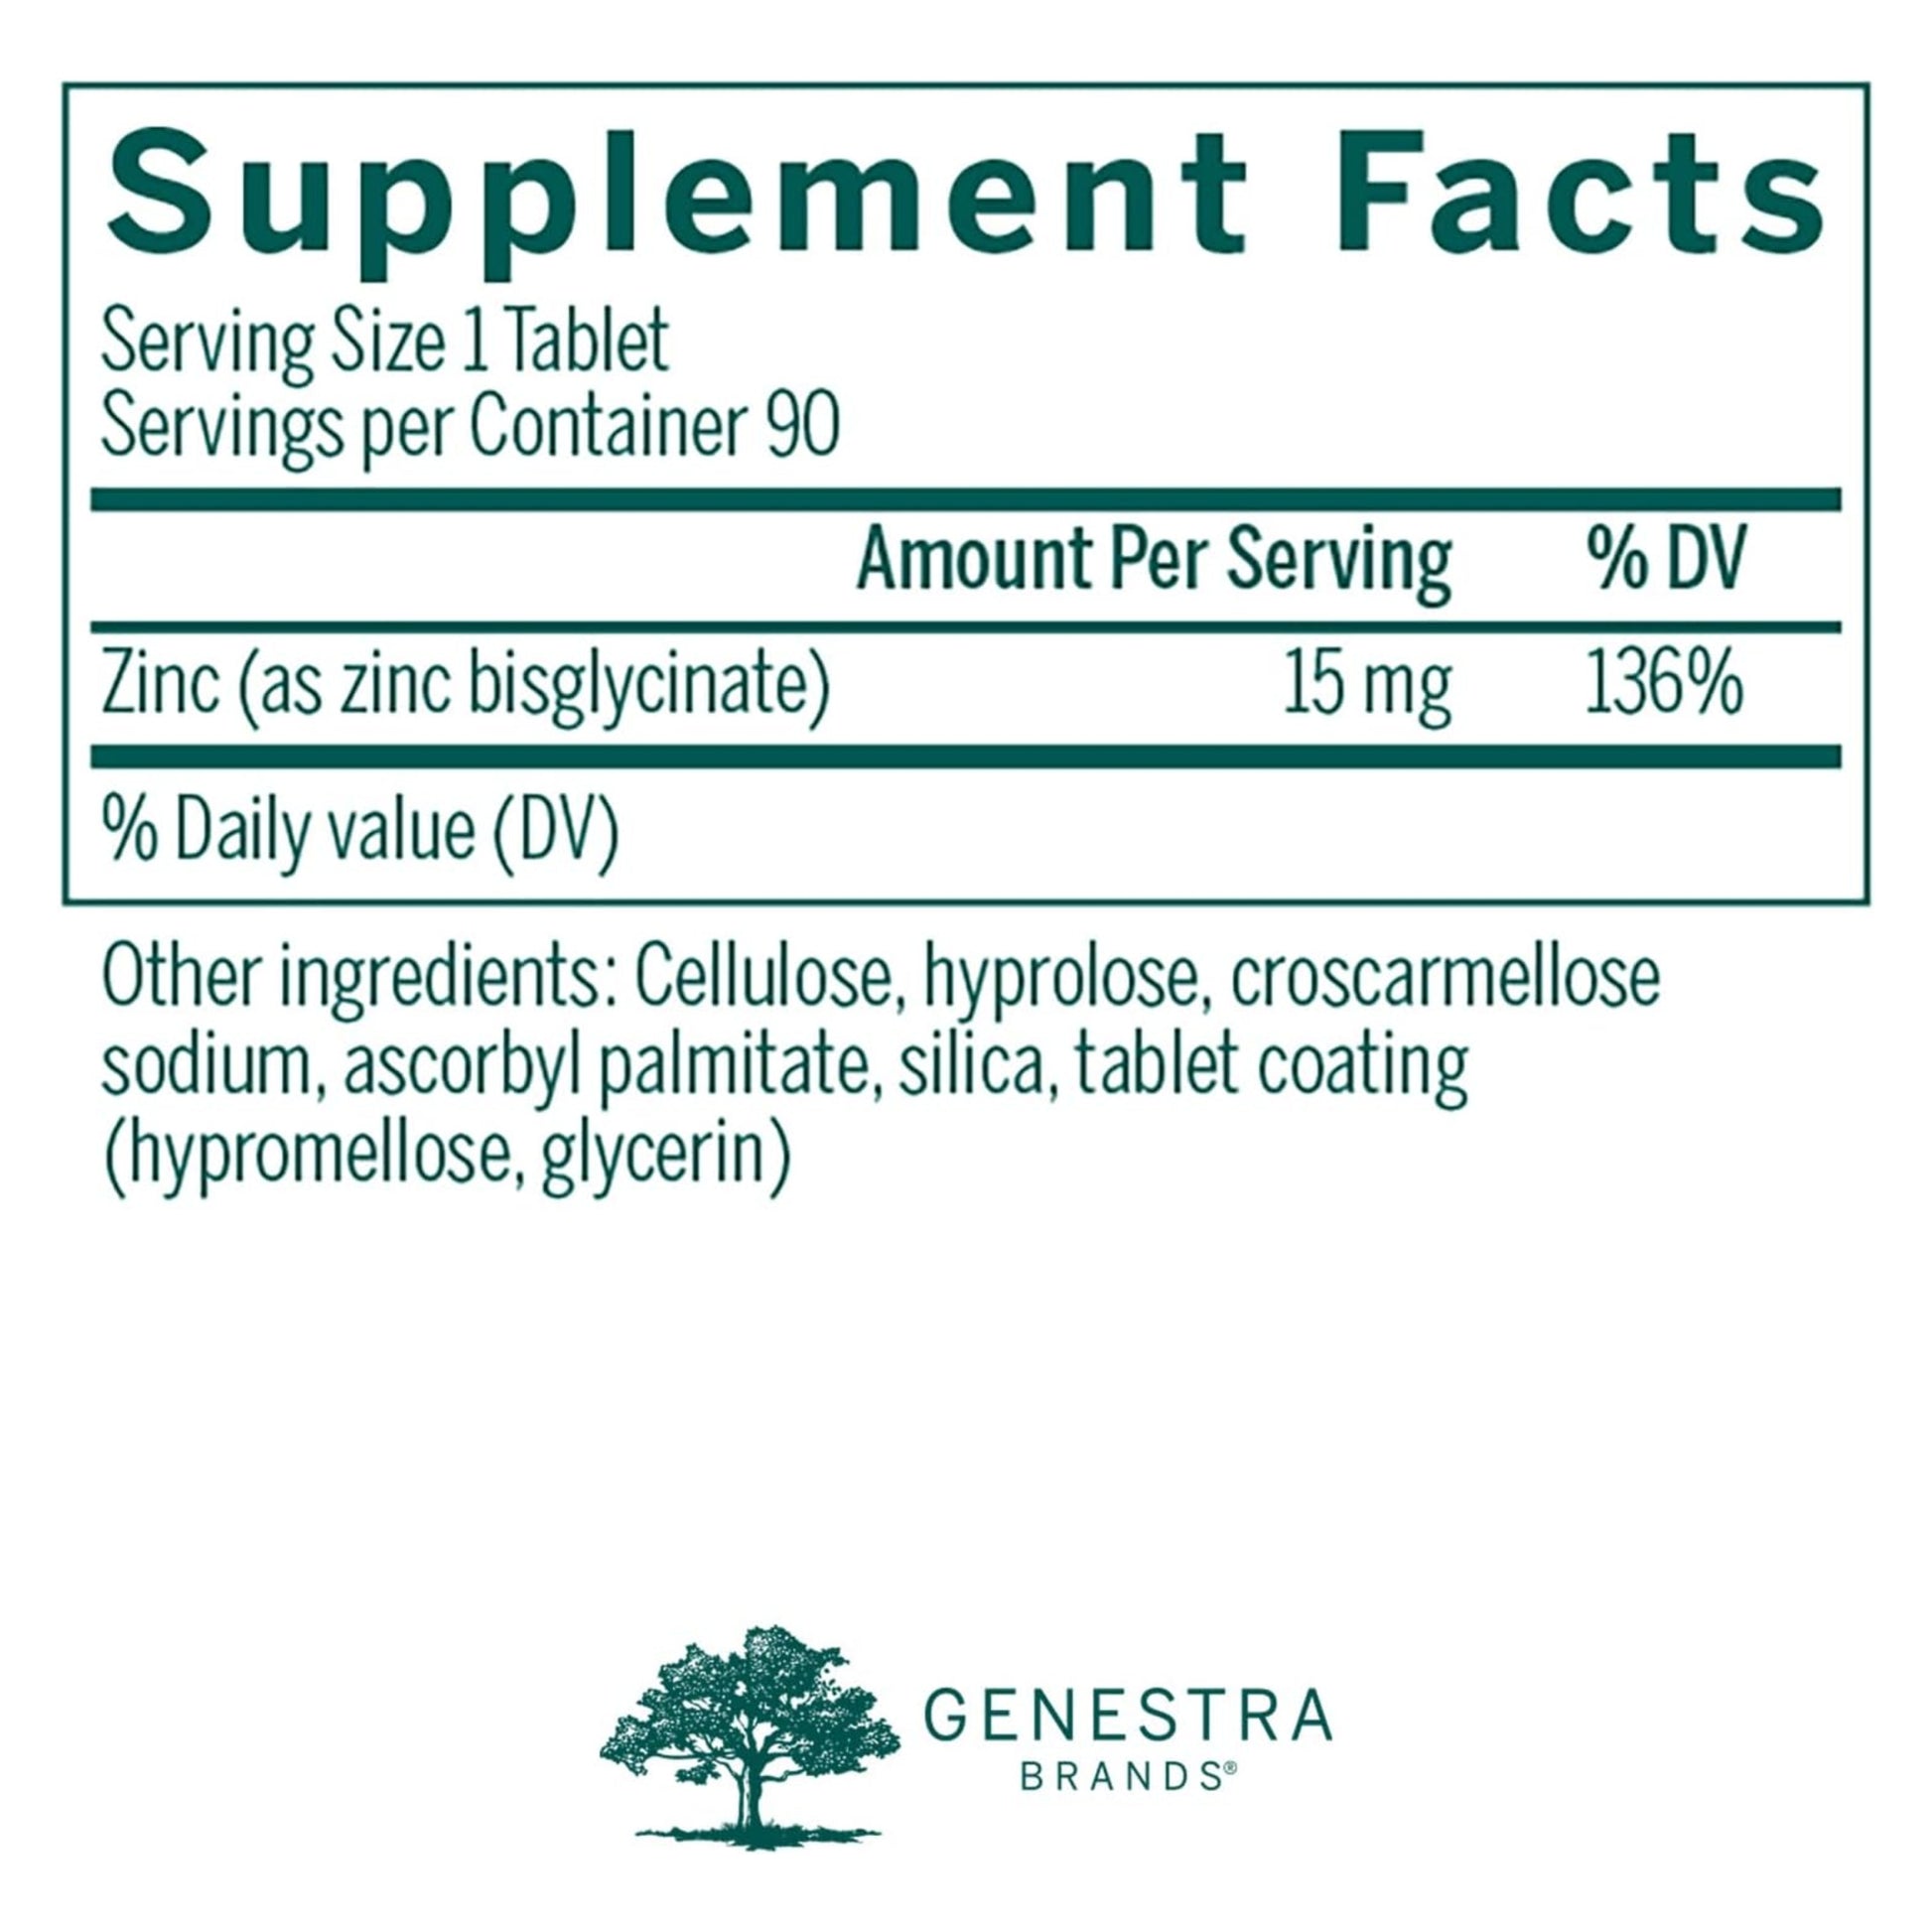 genestra brands zinc supplement facts